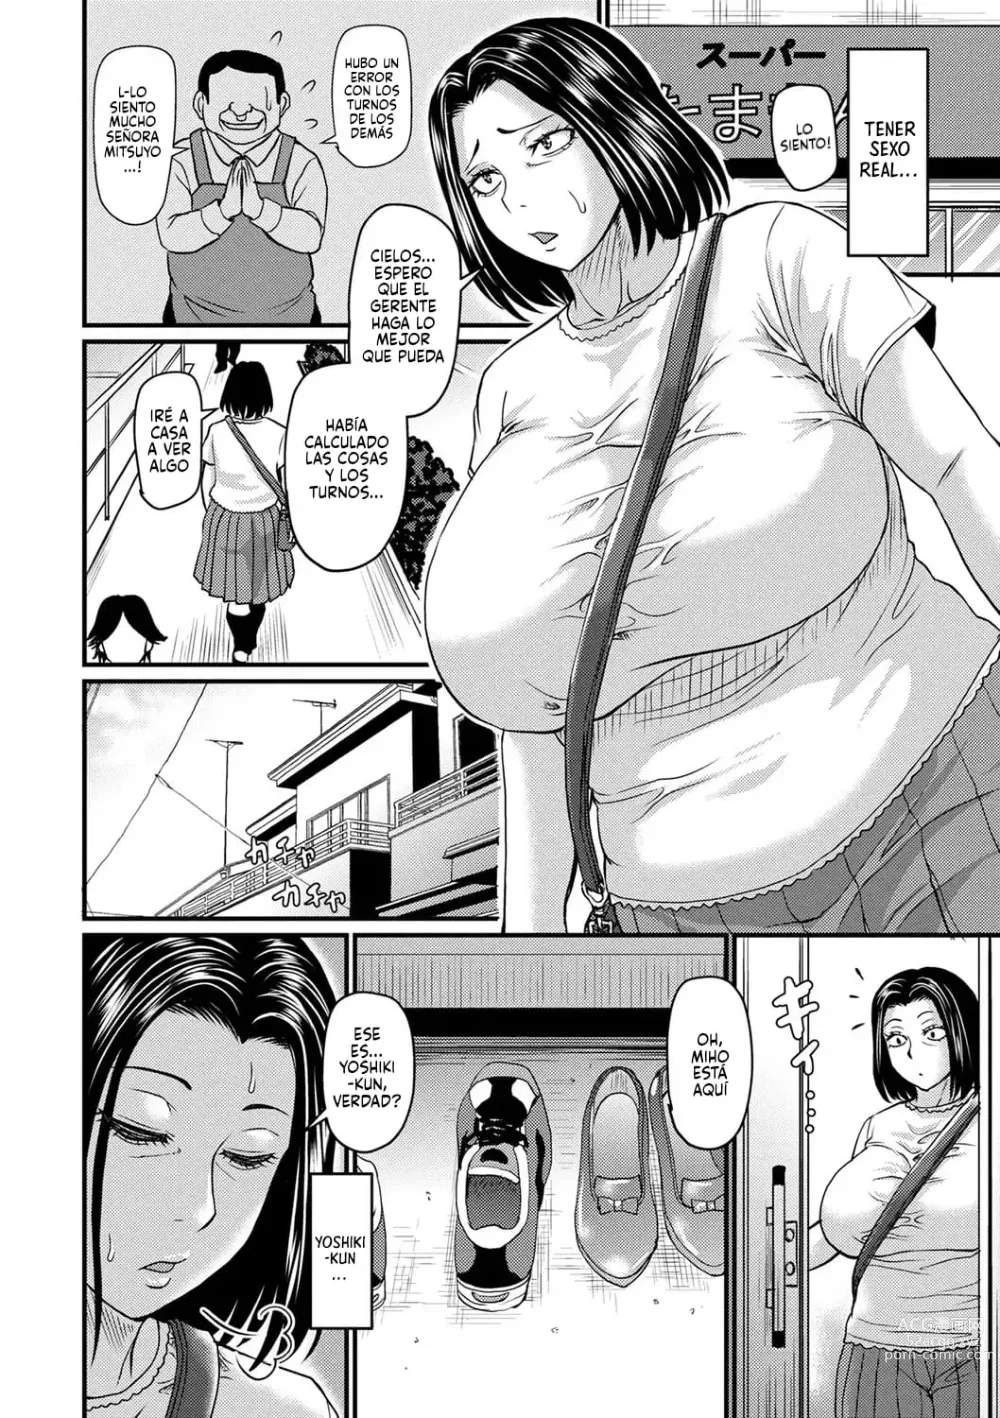 Page 2 of manga El sexo feliz de Mitsuyo